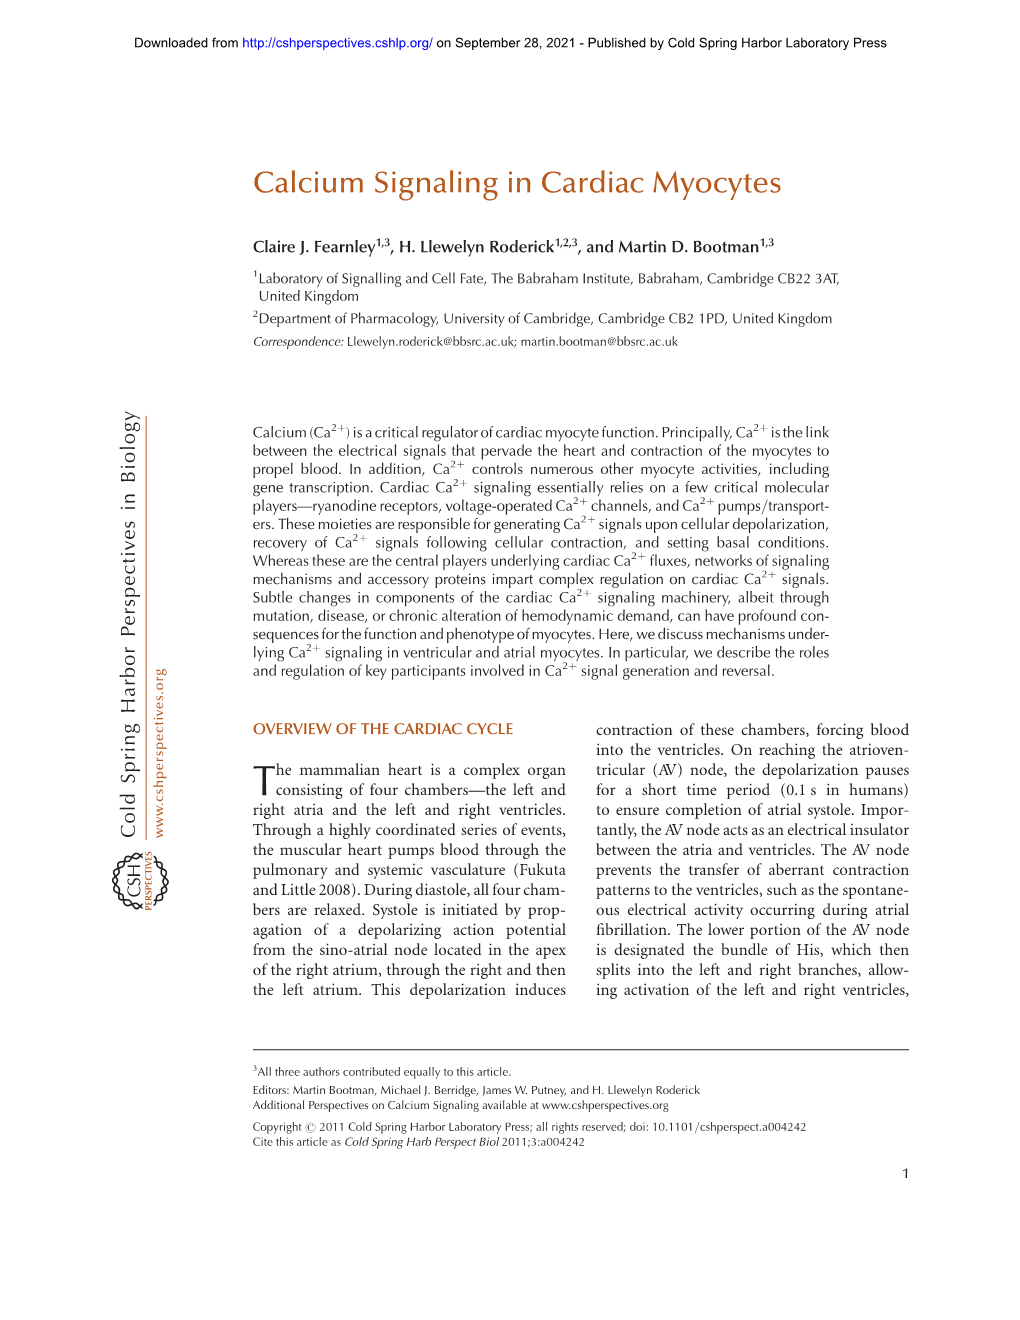 Calcium Signaling in Cardiac Myocytes